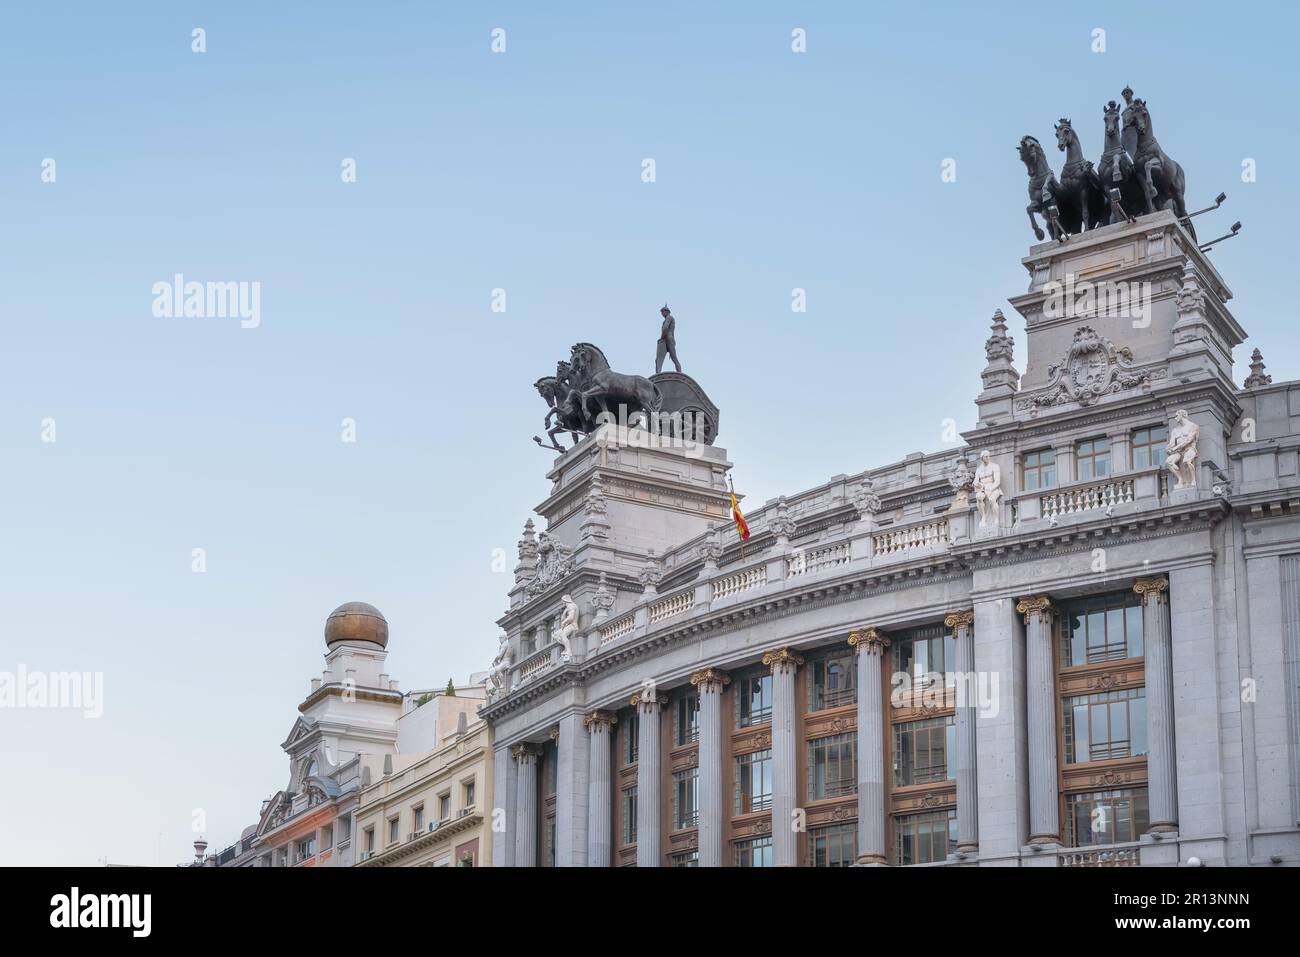 Ehemalige Bilbao Vizcaya Argentaria Bank (BBVA) in der Gran Via Street - Madrid, Spanien Stockfoto